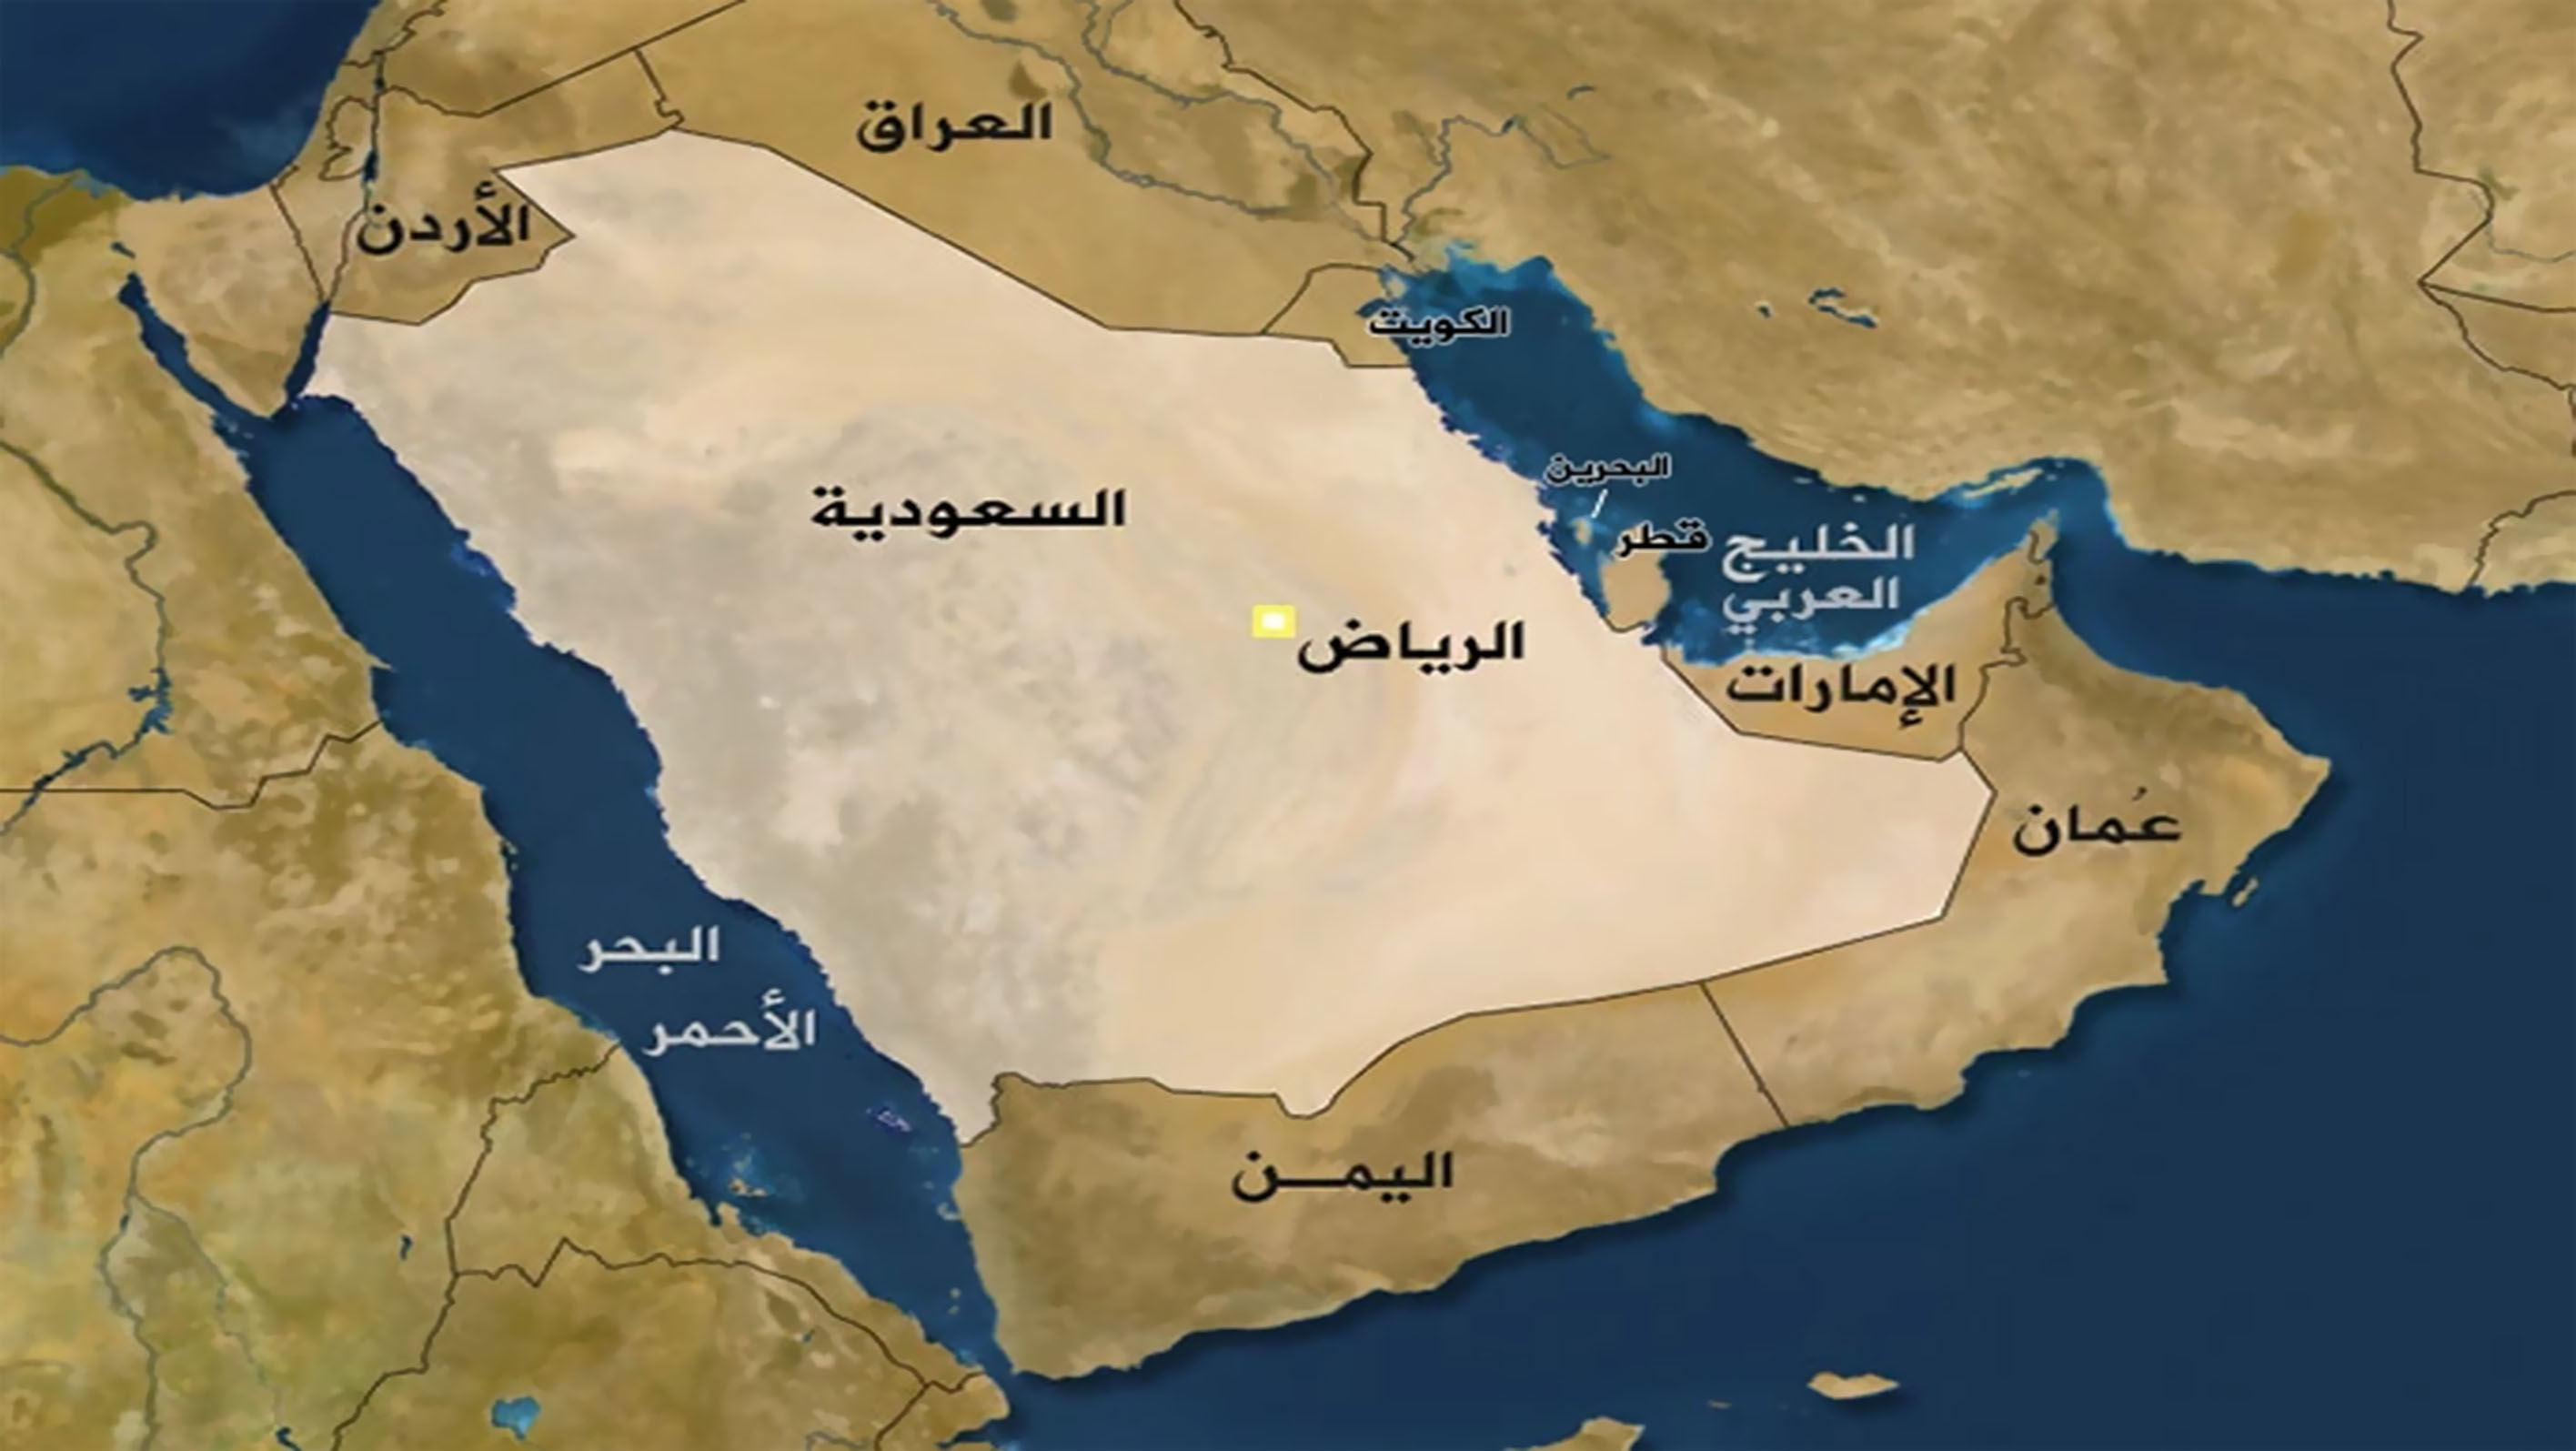 Yemen will not disappear as Emirati-Saudi monarchies wish, Nobel laureate says